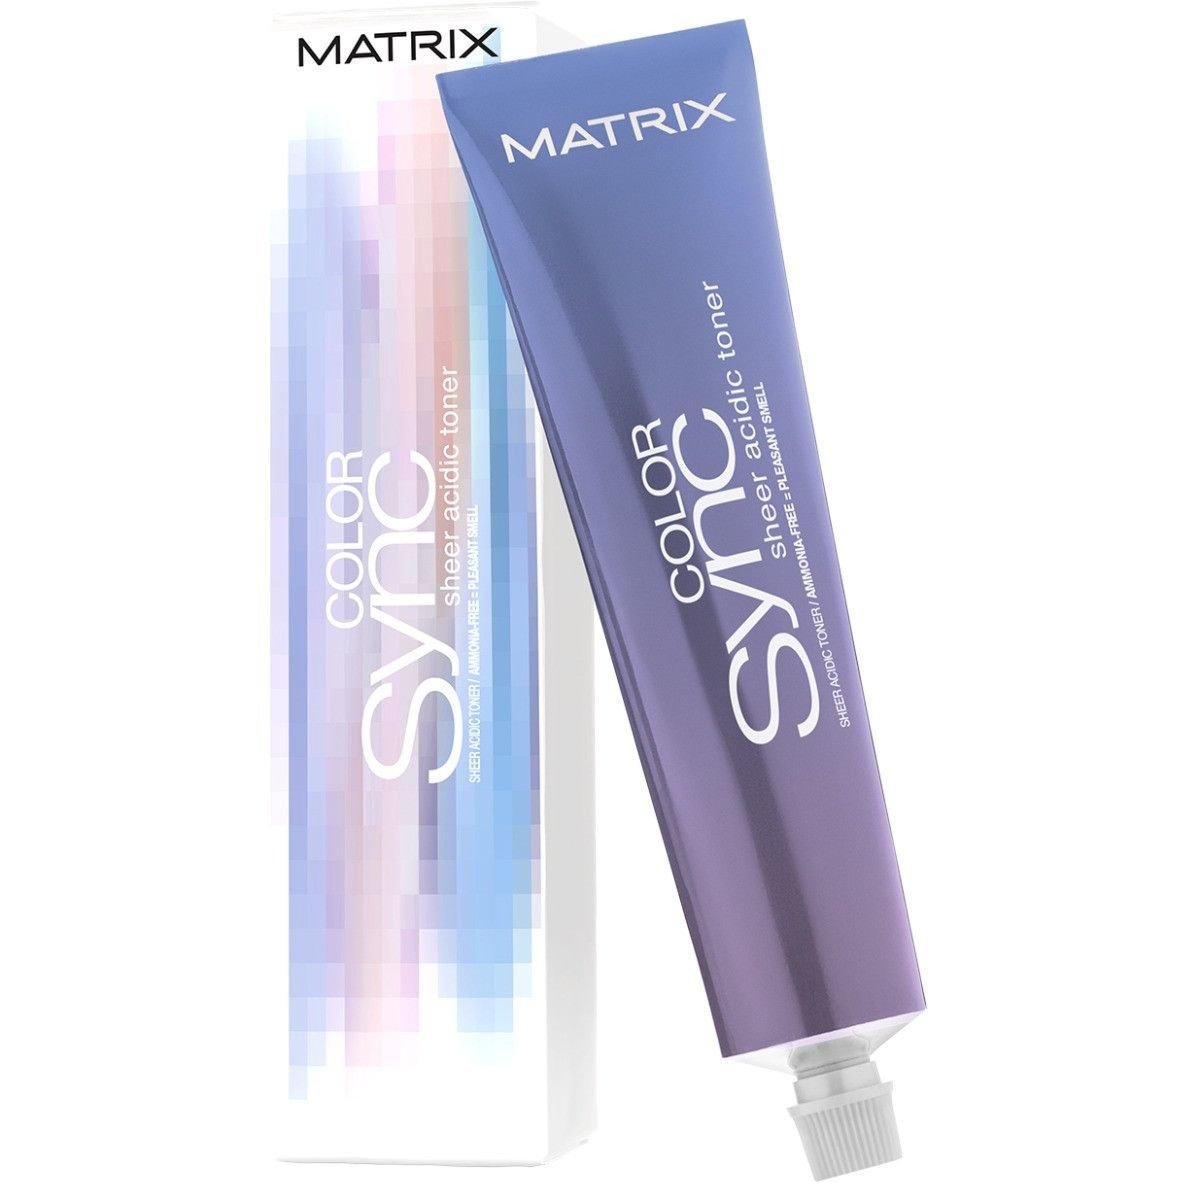 Matrix - SoColor Sync Sheer Nude 8AG - 90ml